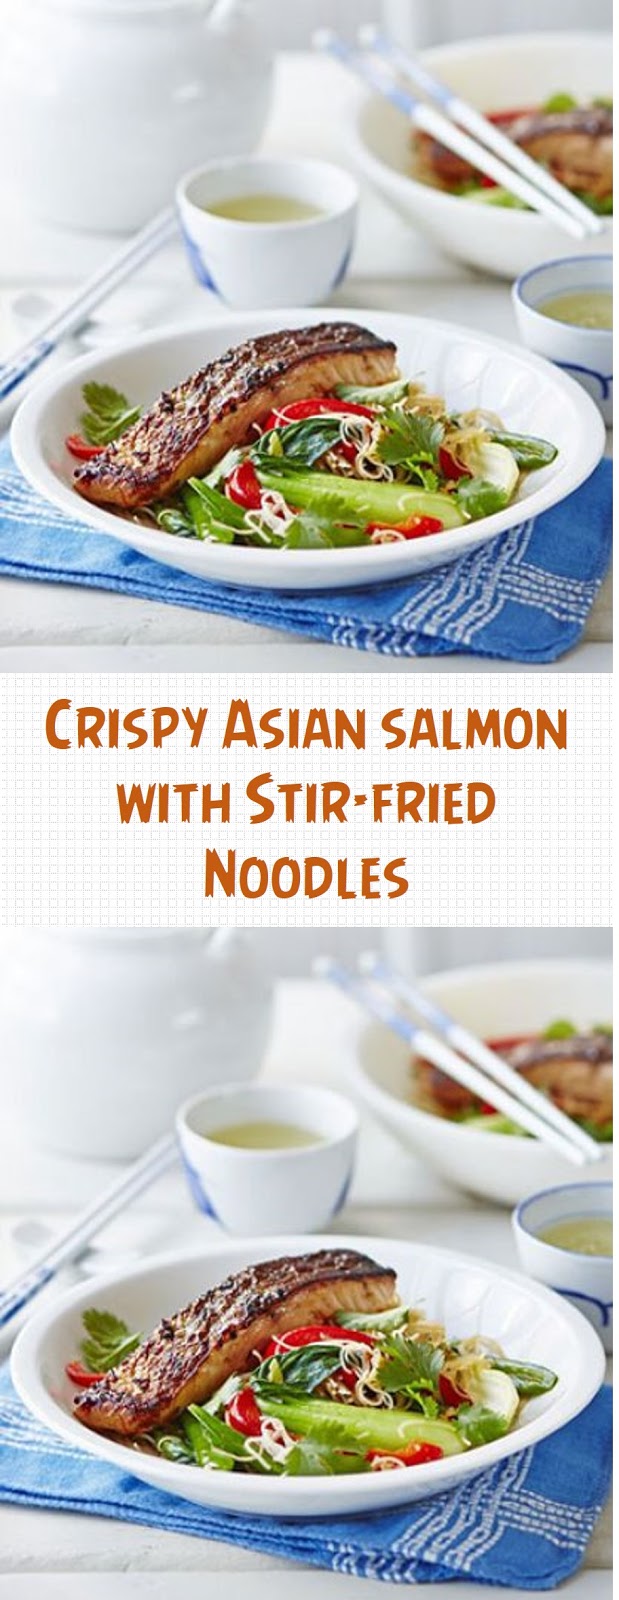 Crispy Asian salmon with Stir-fried Noodles